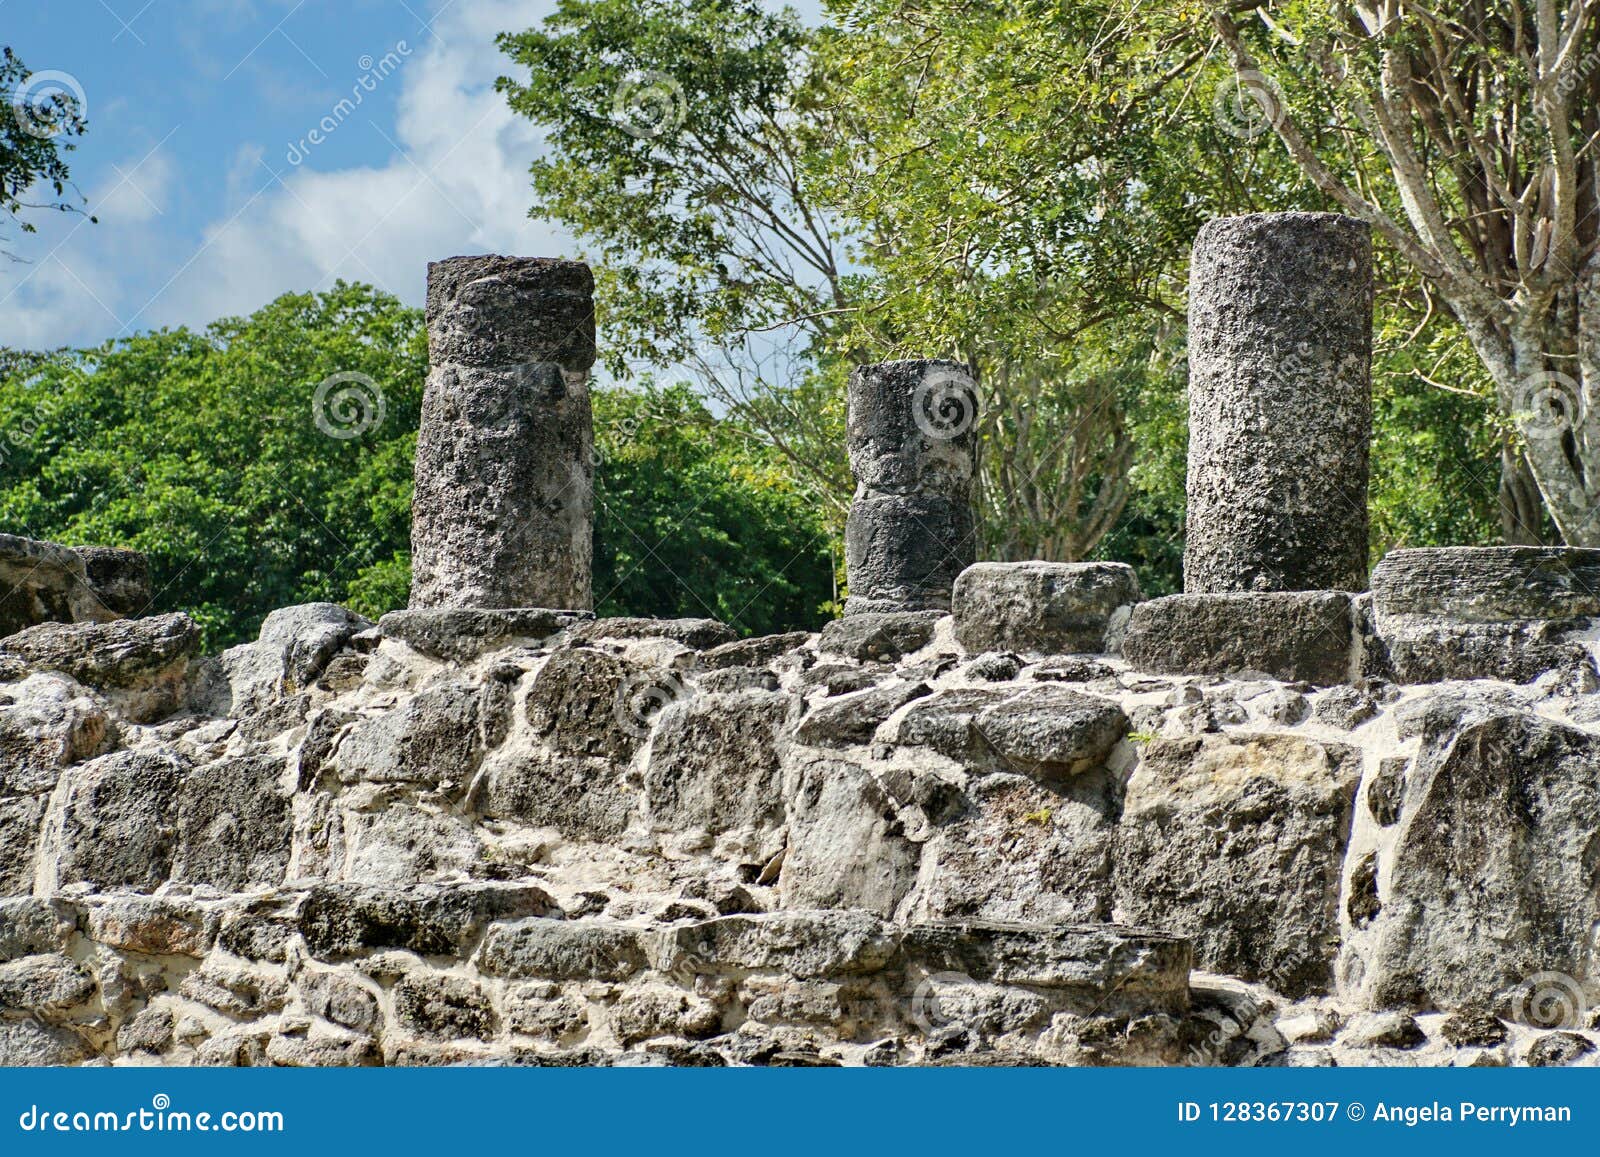 mayan ruin in cozumel, mexico